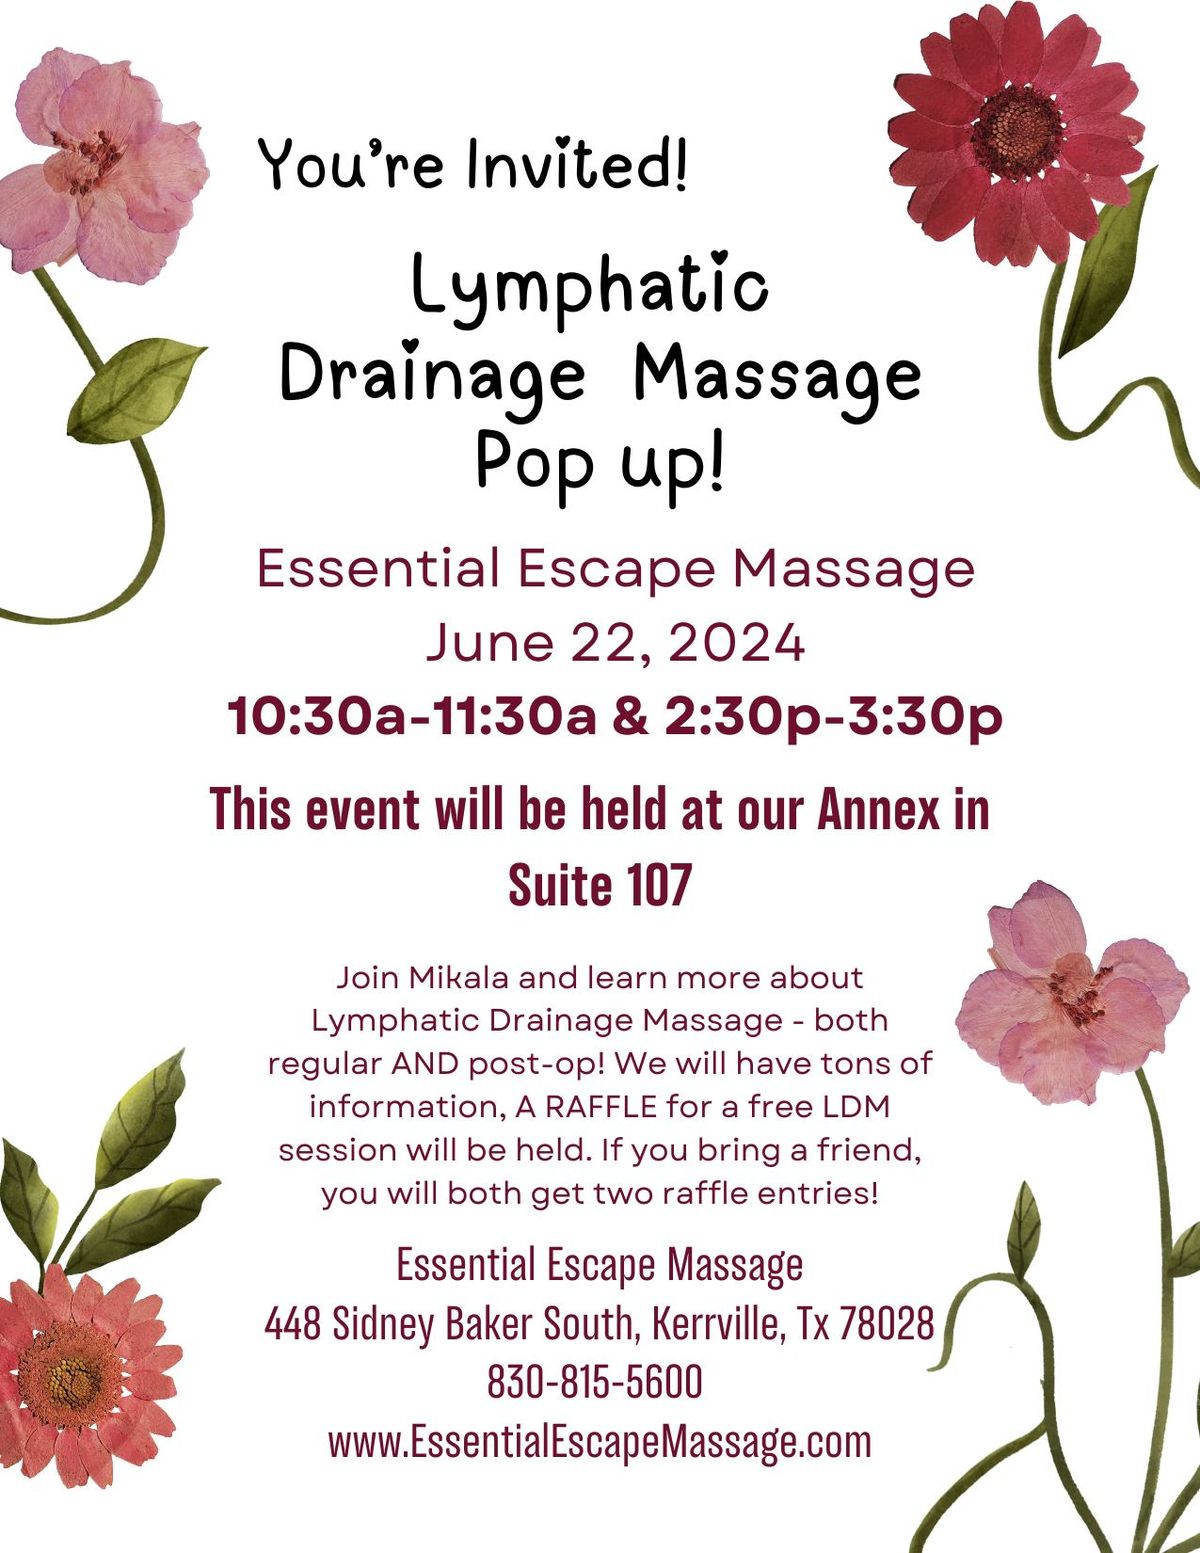 POP UP! Lymphatic Drainage Massage